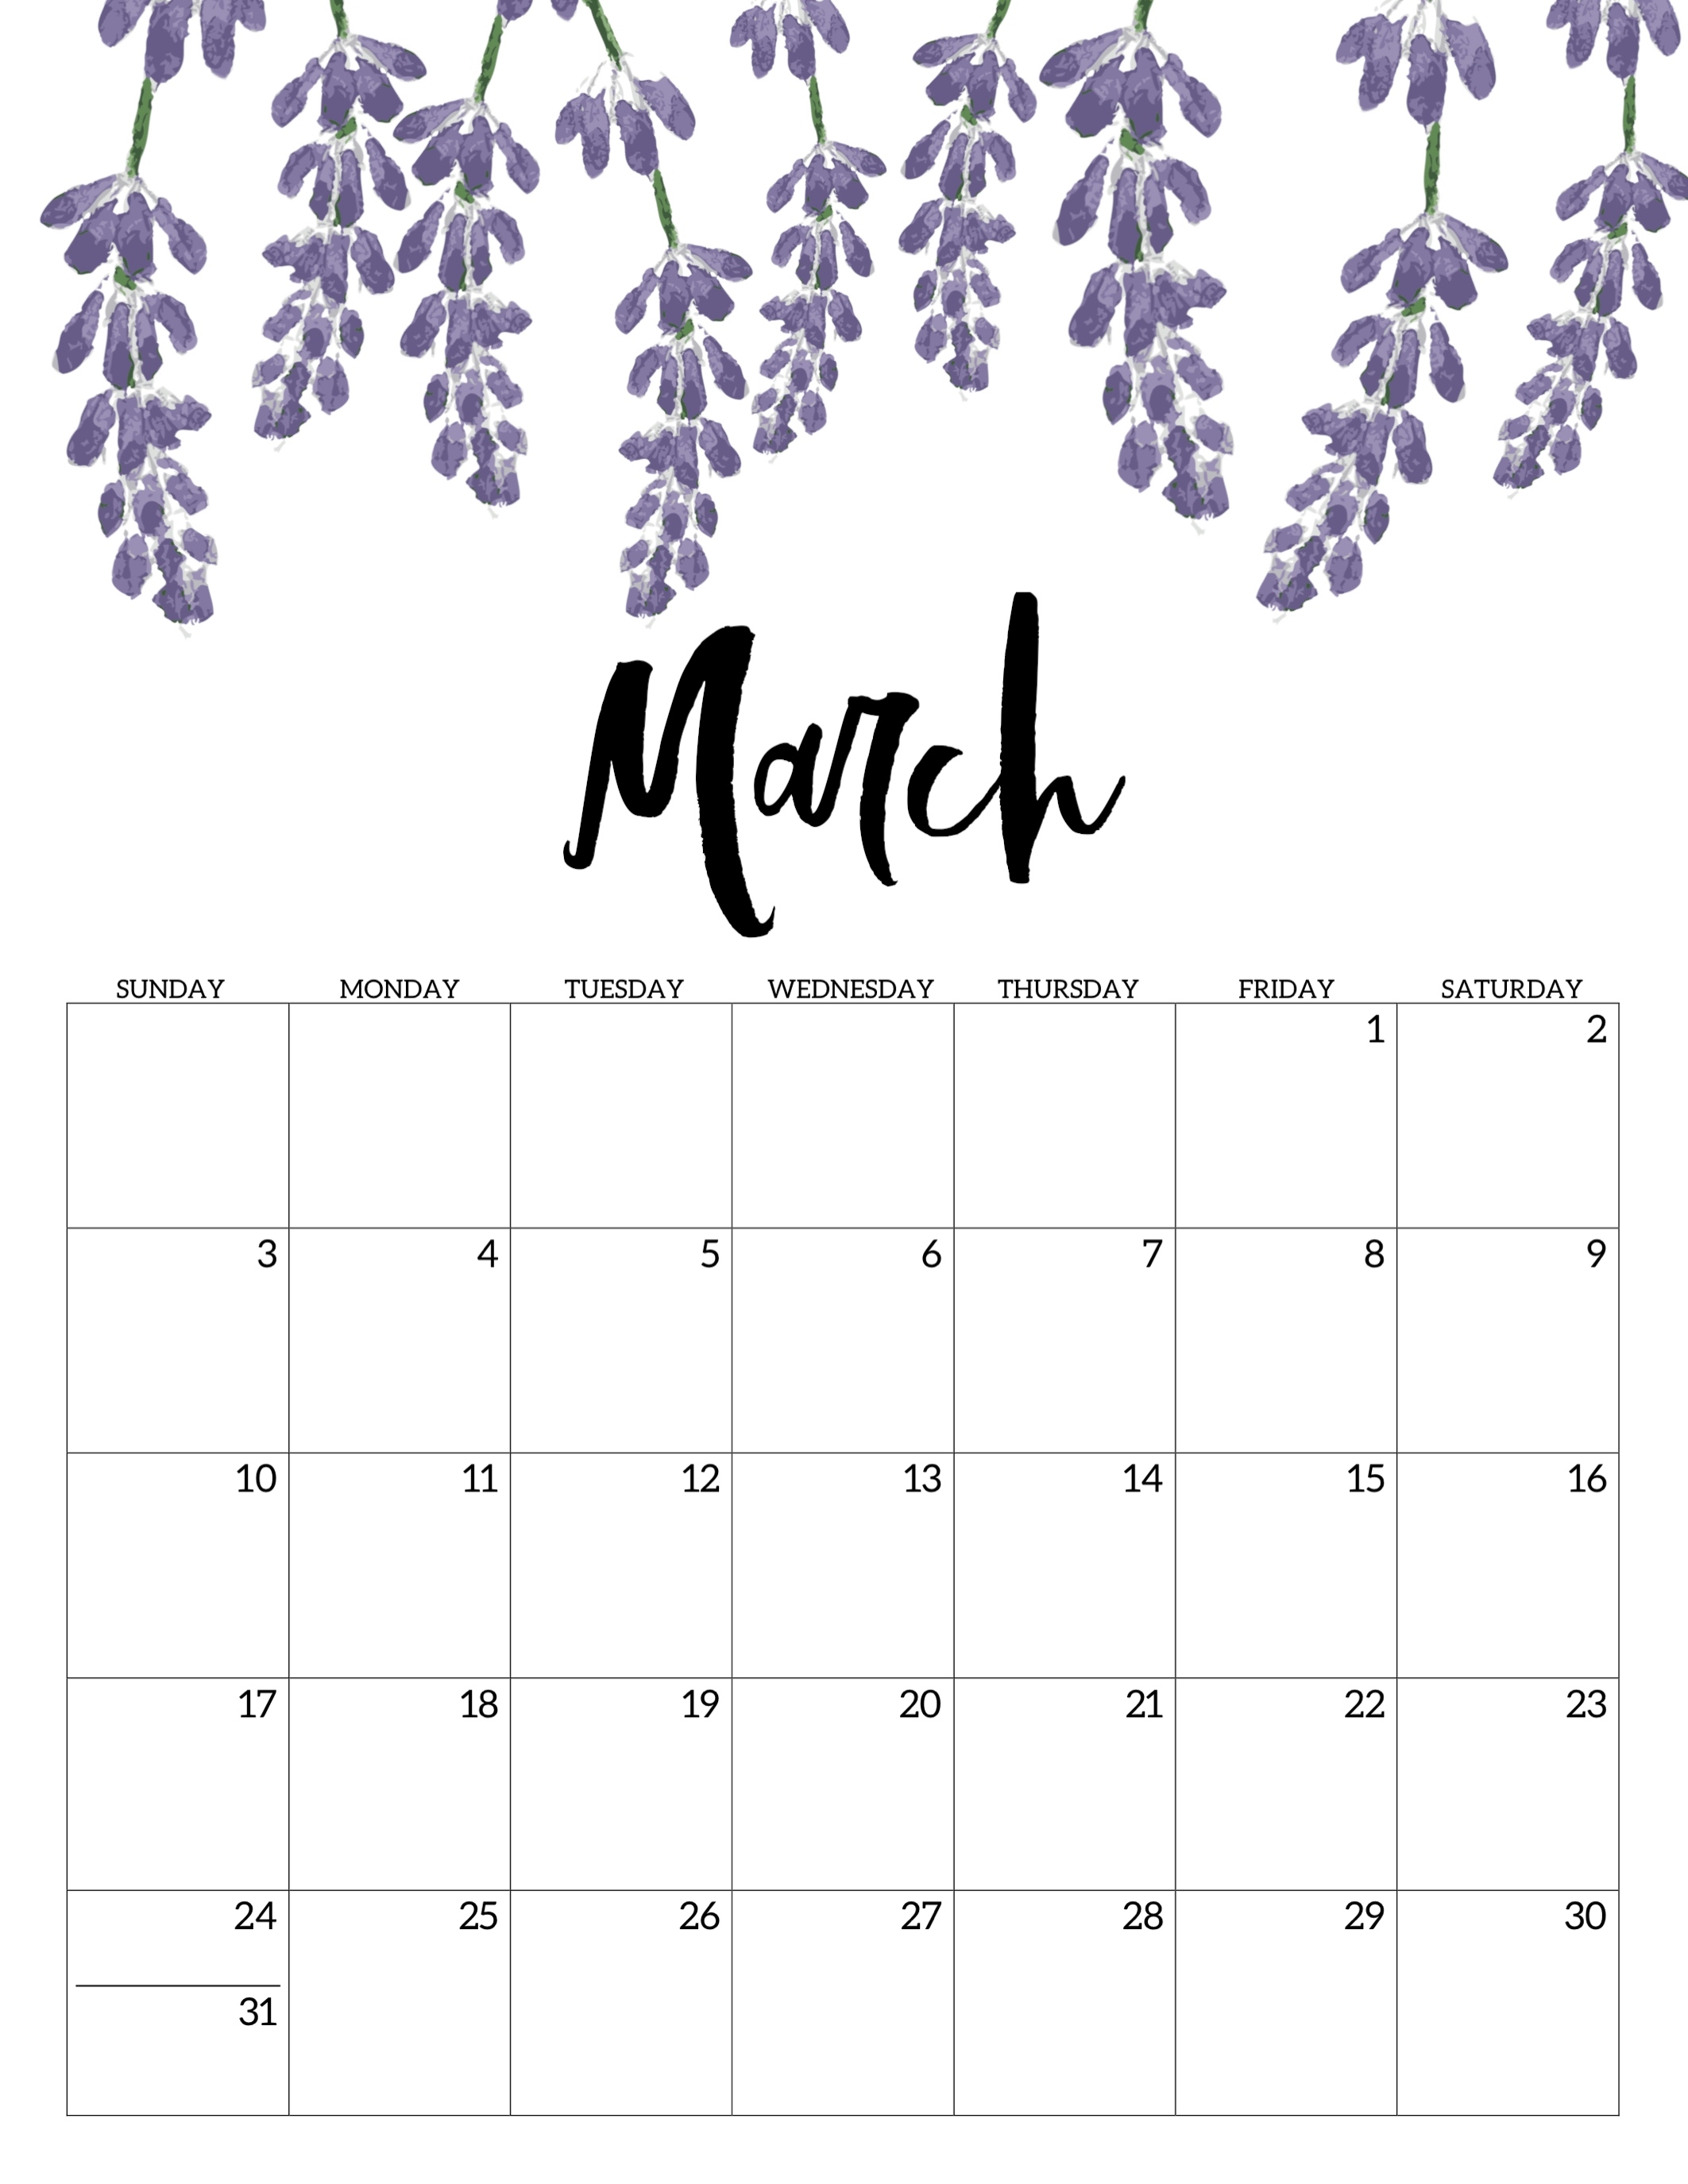 Free Printable Calendar 2019 - Floral - Paper Trail Design Printable Calendars 2020 Black And White